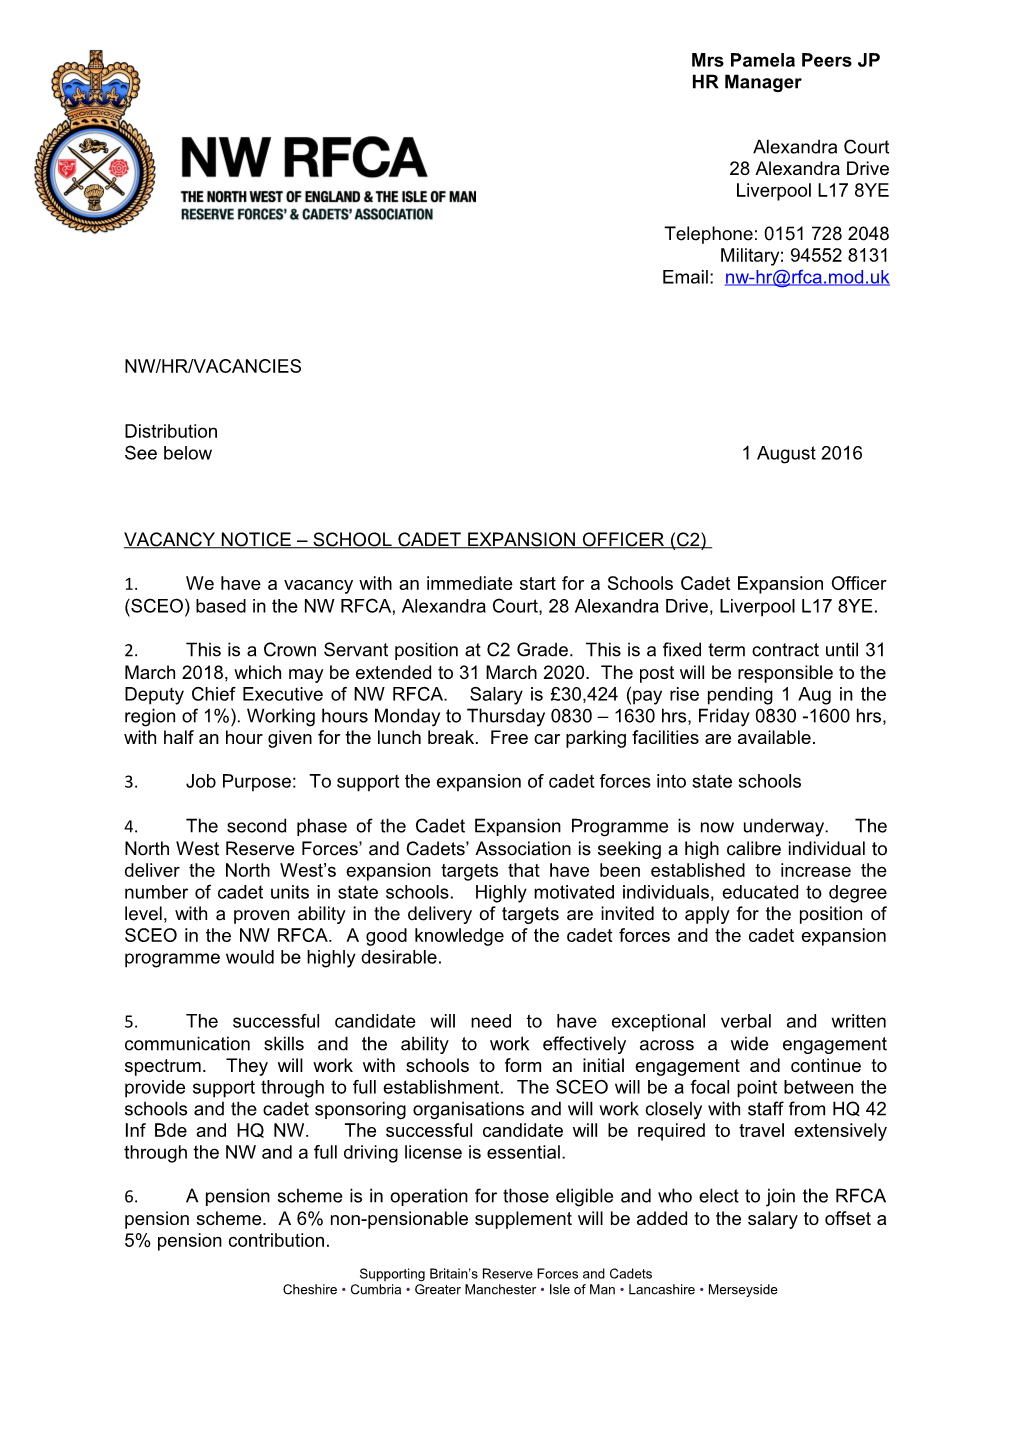 Vacancy Notice School Cadet Expansion Officer (C2)